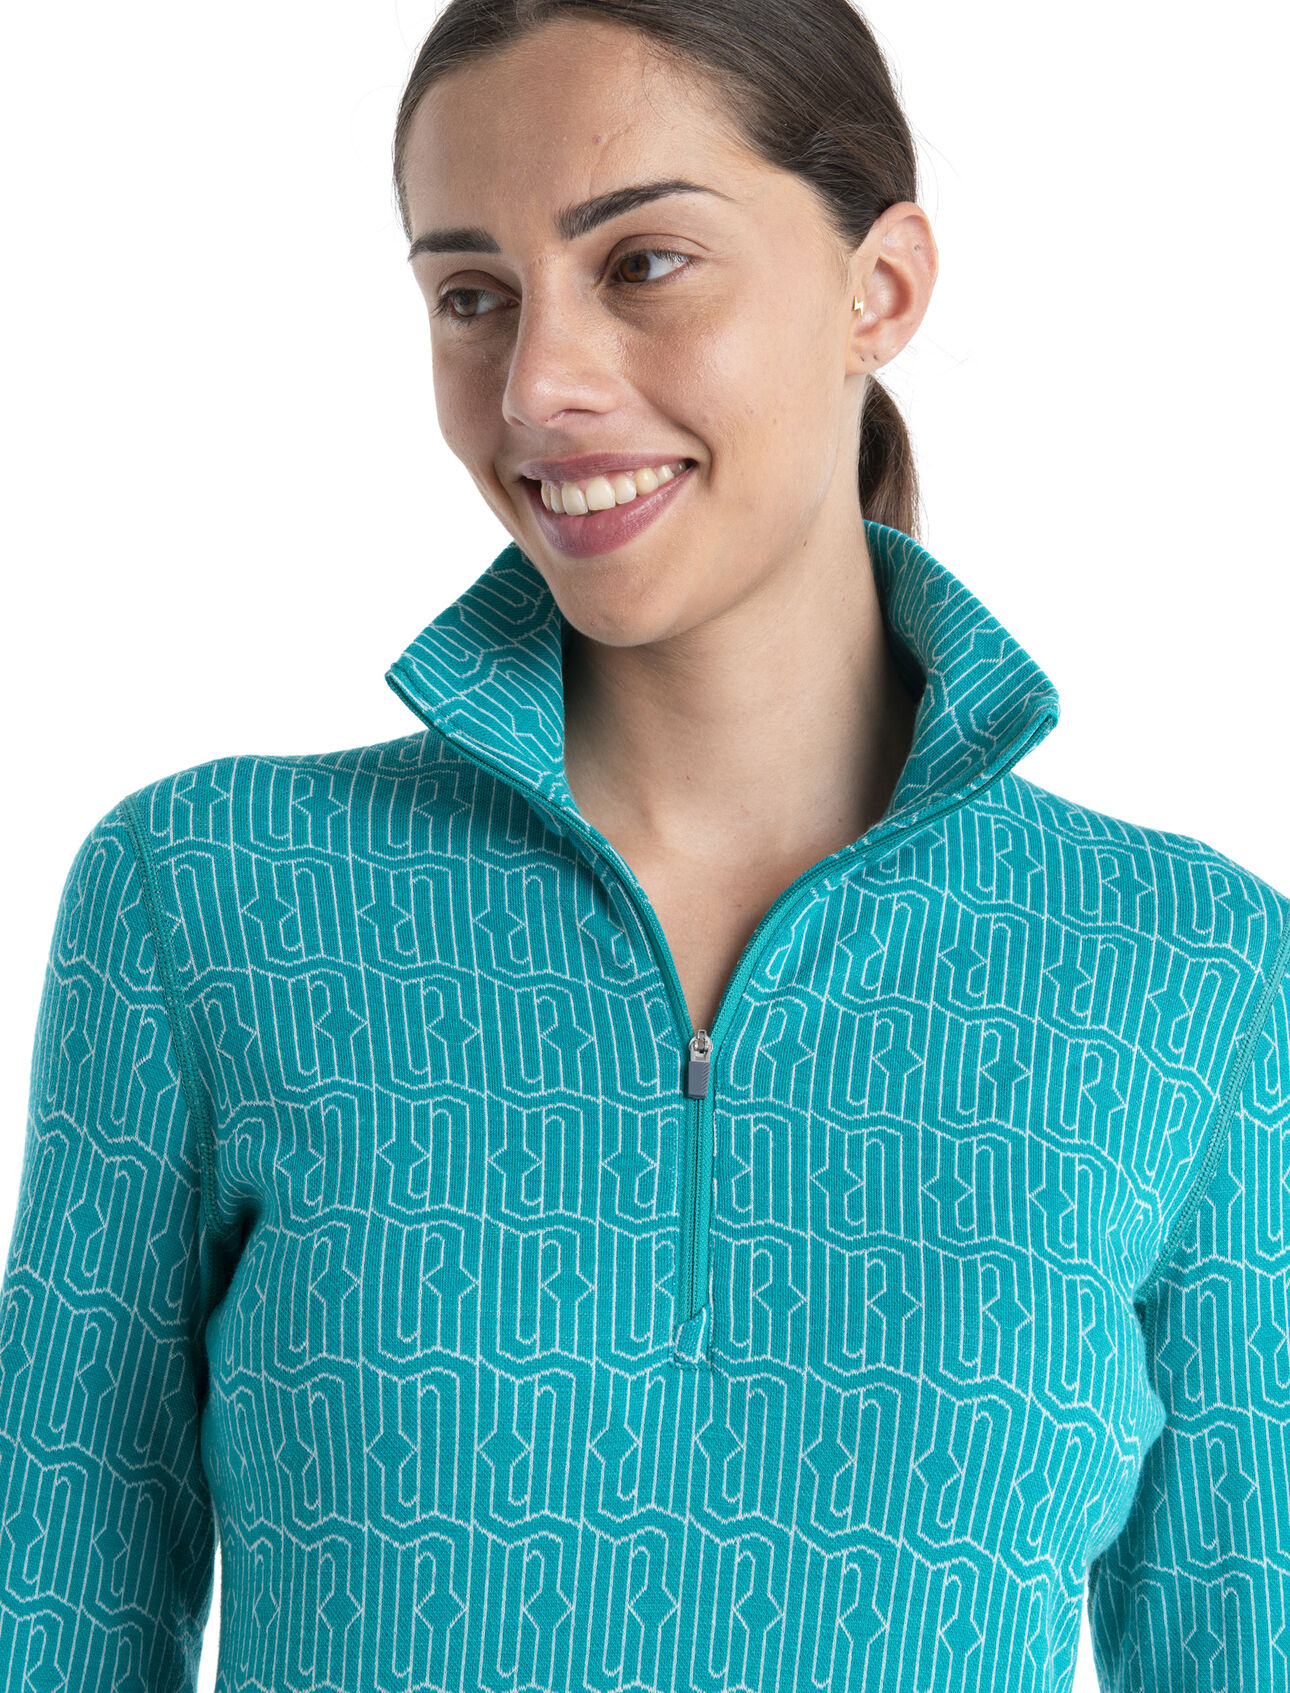 Long-Sleeve Jacquard Fleece Jacket